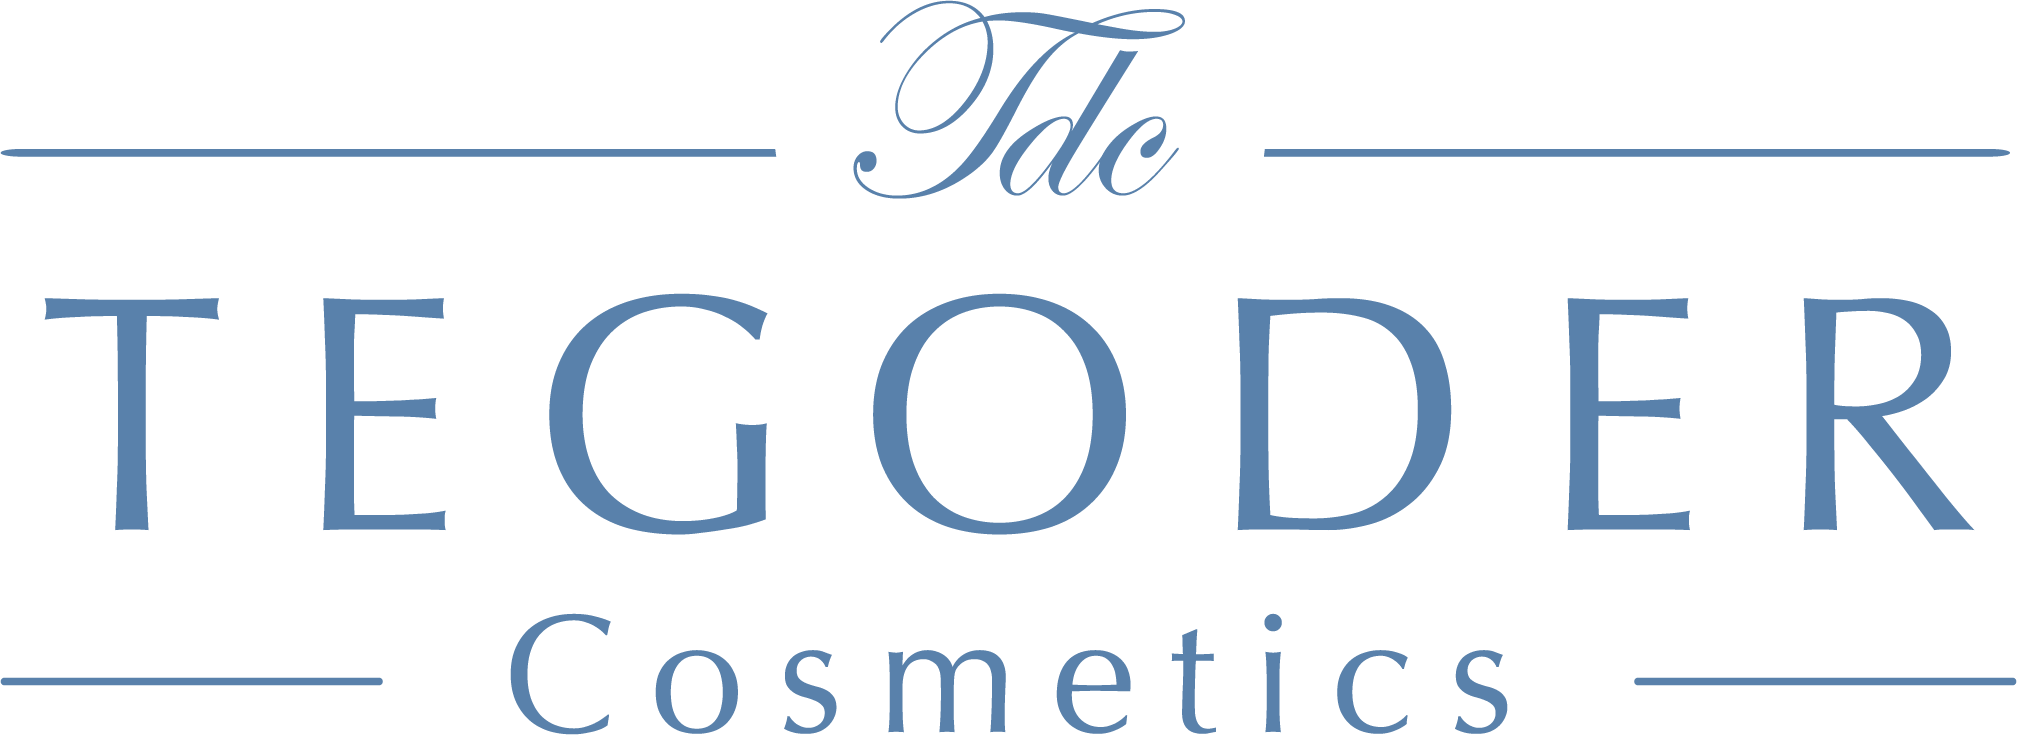 Tegoder Cosmetics Logo